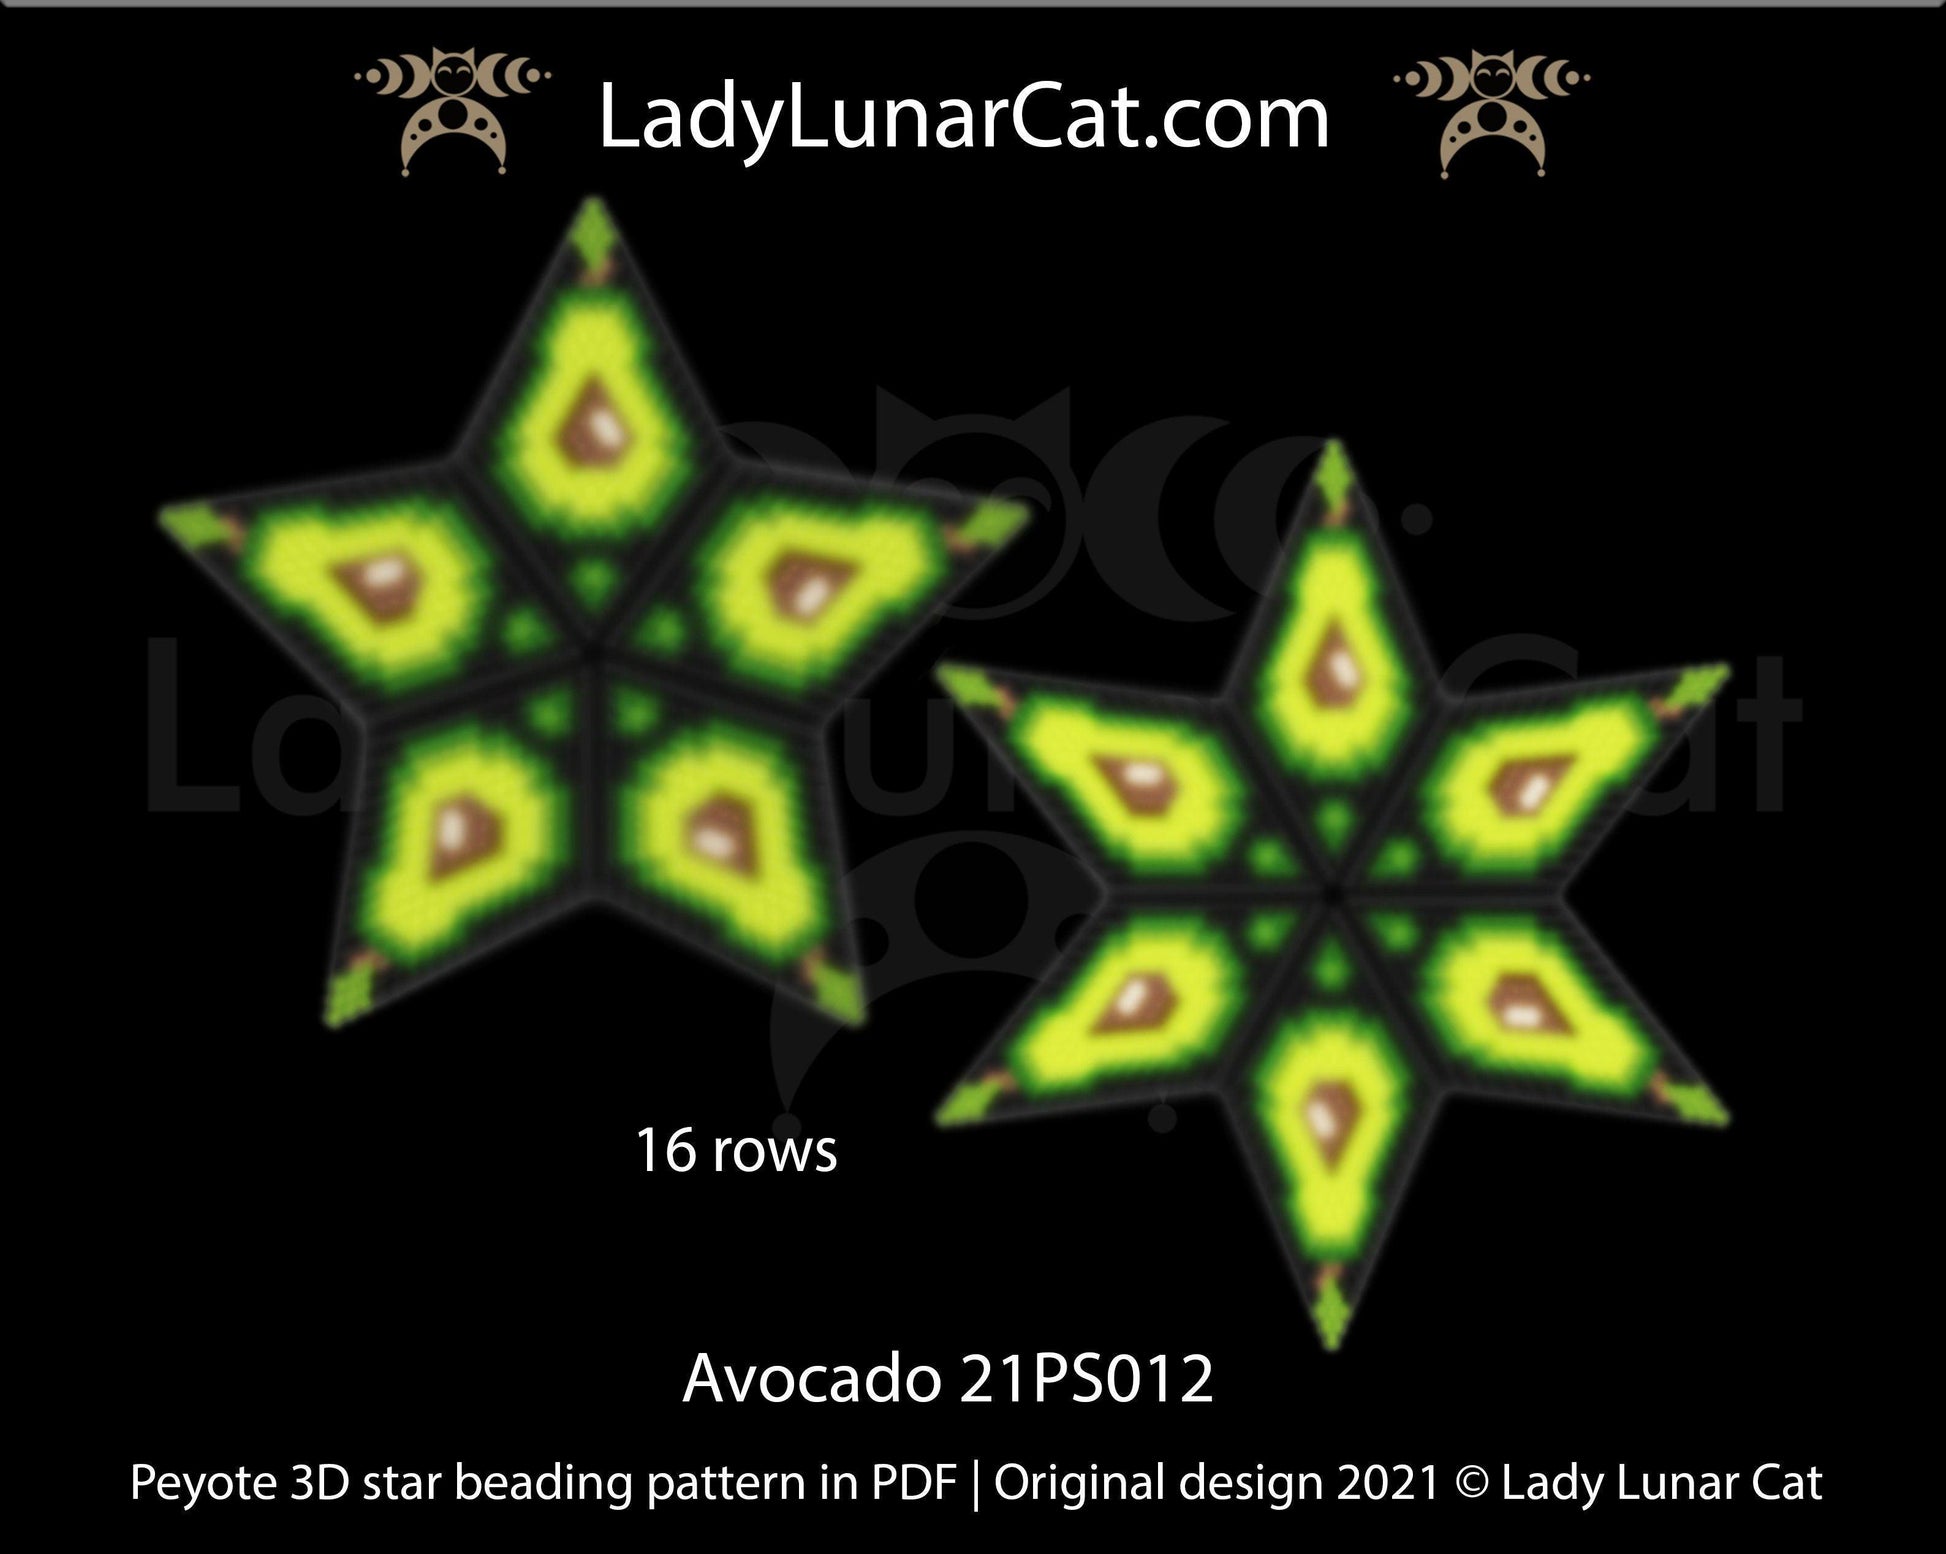 Copy of Beaded star pattern - Lemon 21PS011 | Seed beads tutorial for 3D peyote star LadyLunarCat